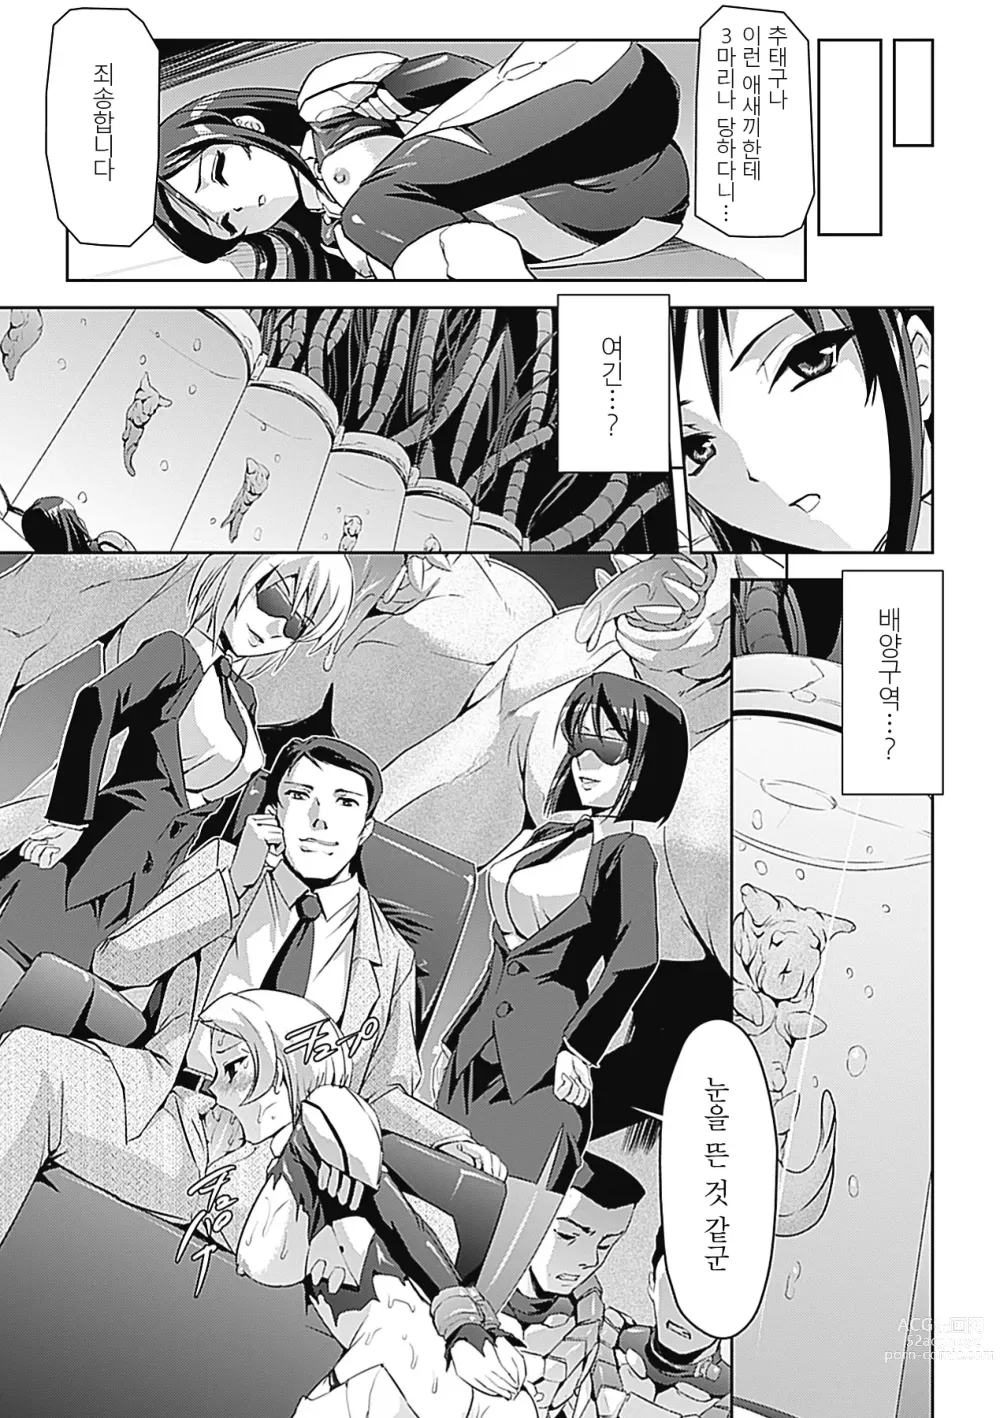 Page 3 of manga Inma no Nie